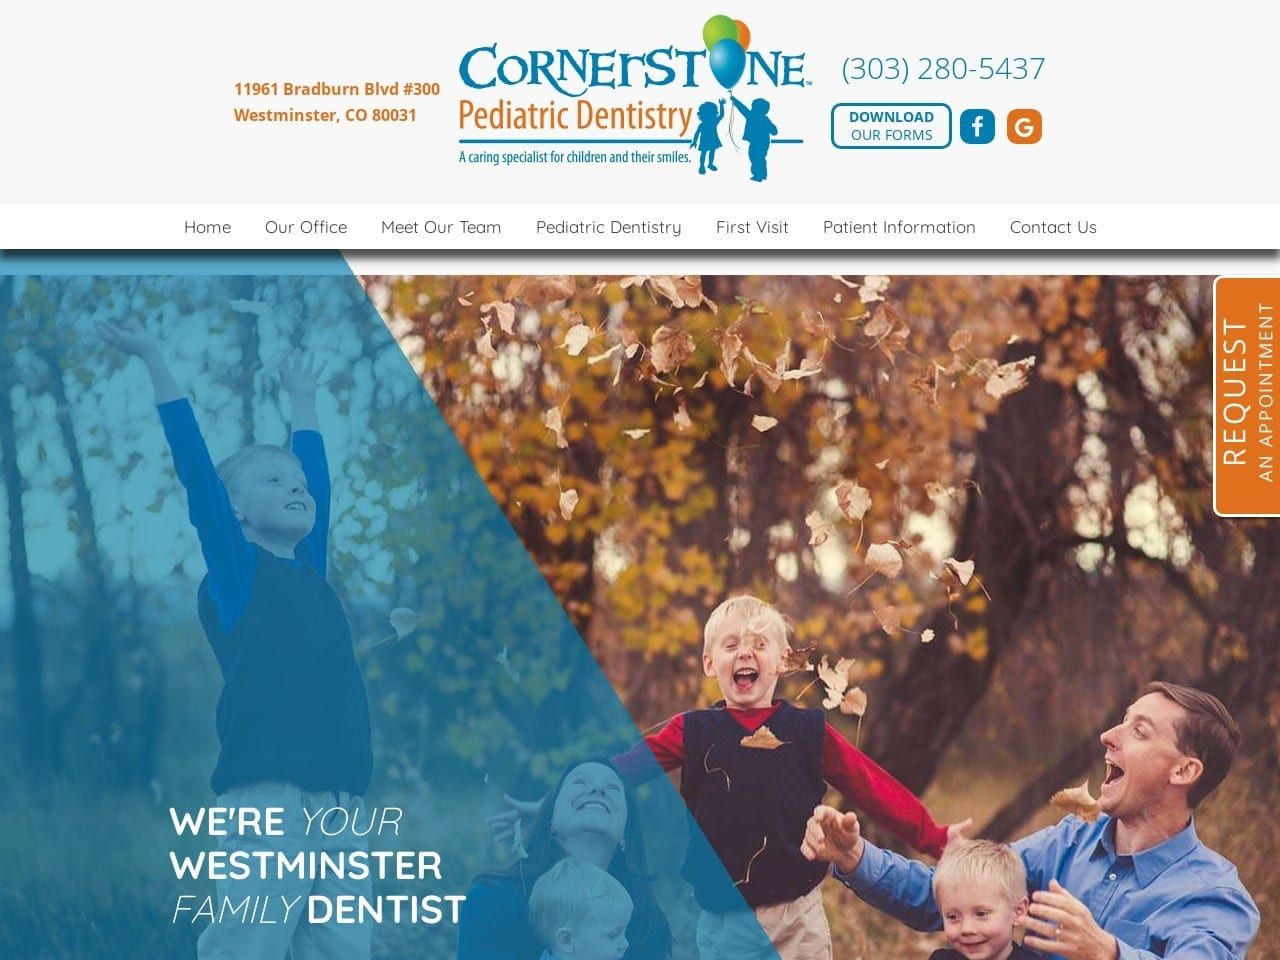 Cornerstone Pediatric Dentist Website Screenshot from cornerstonekidsdentist.com